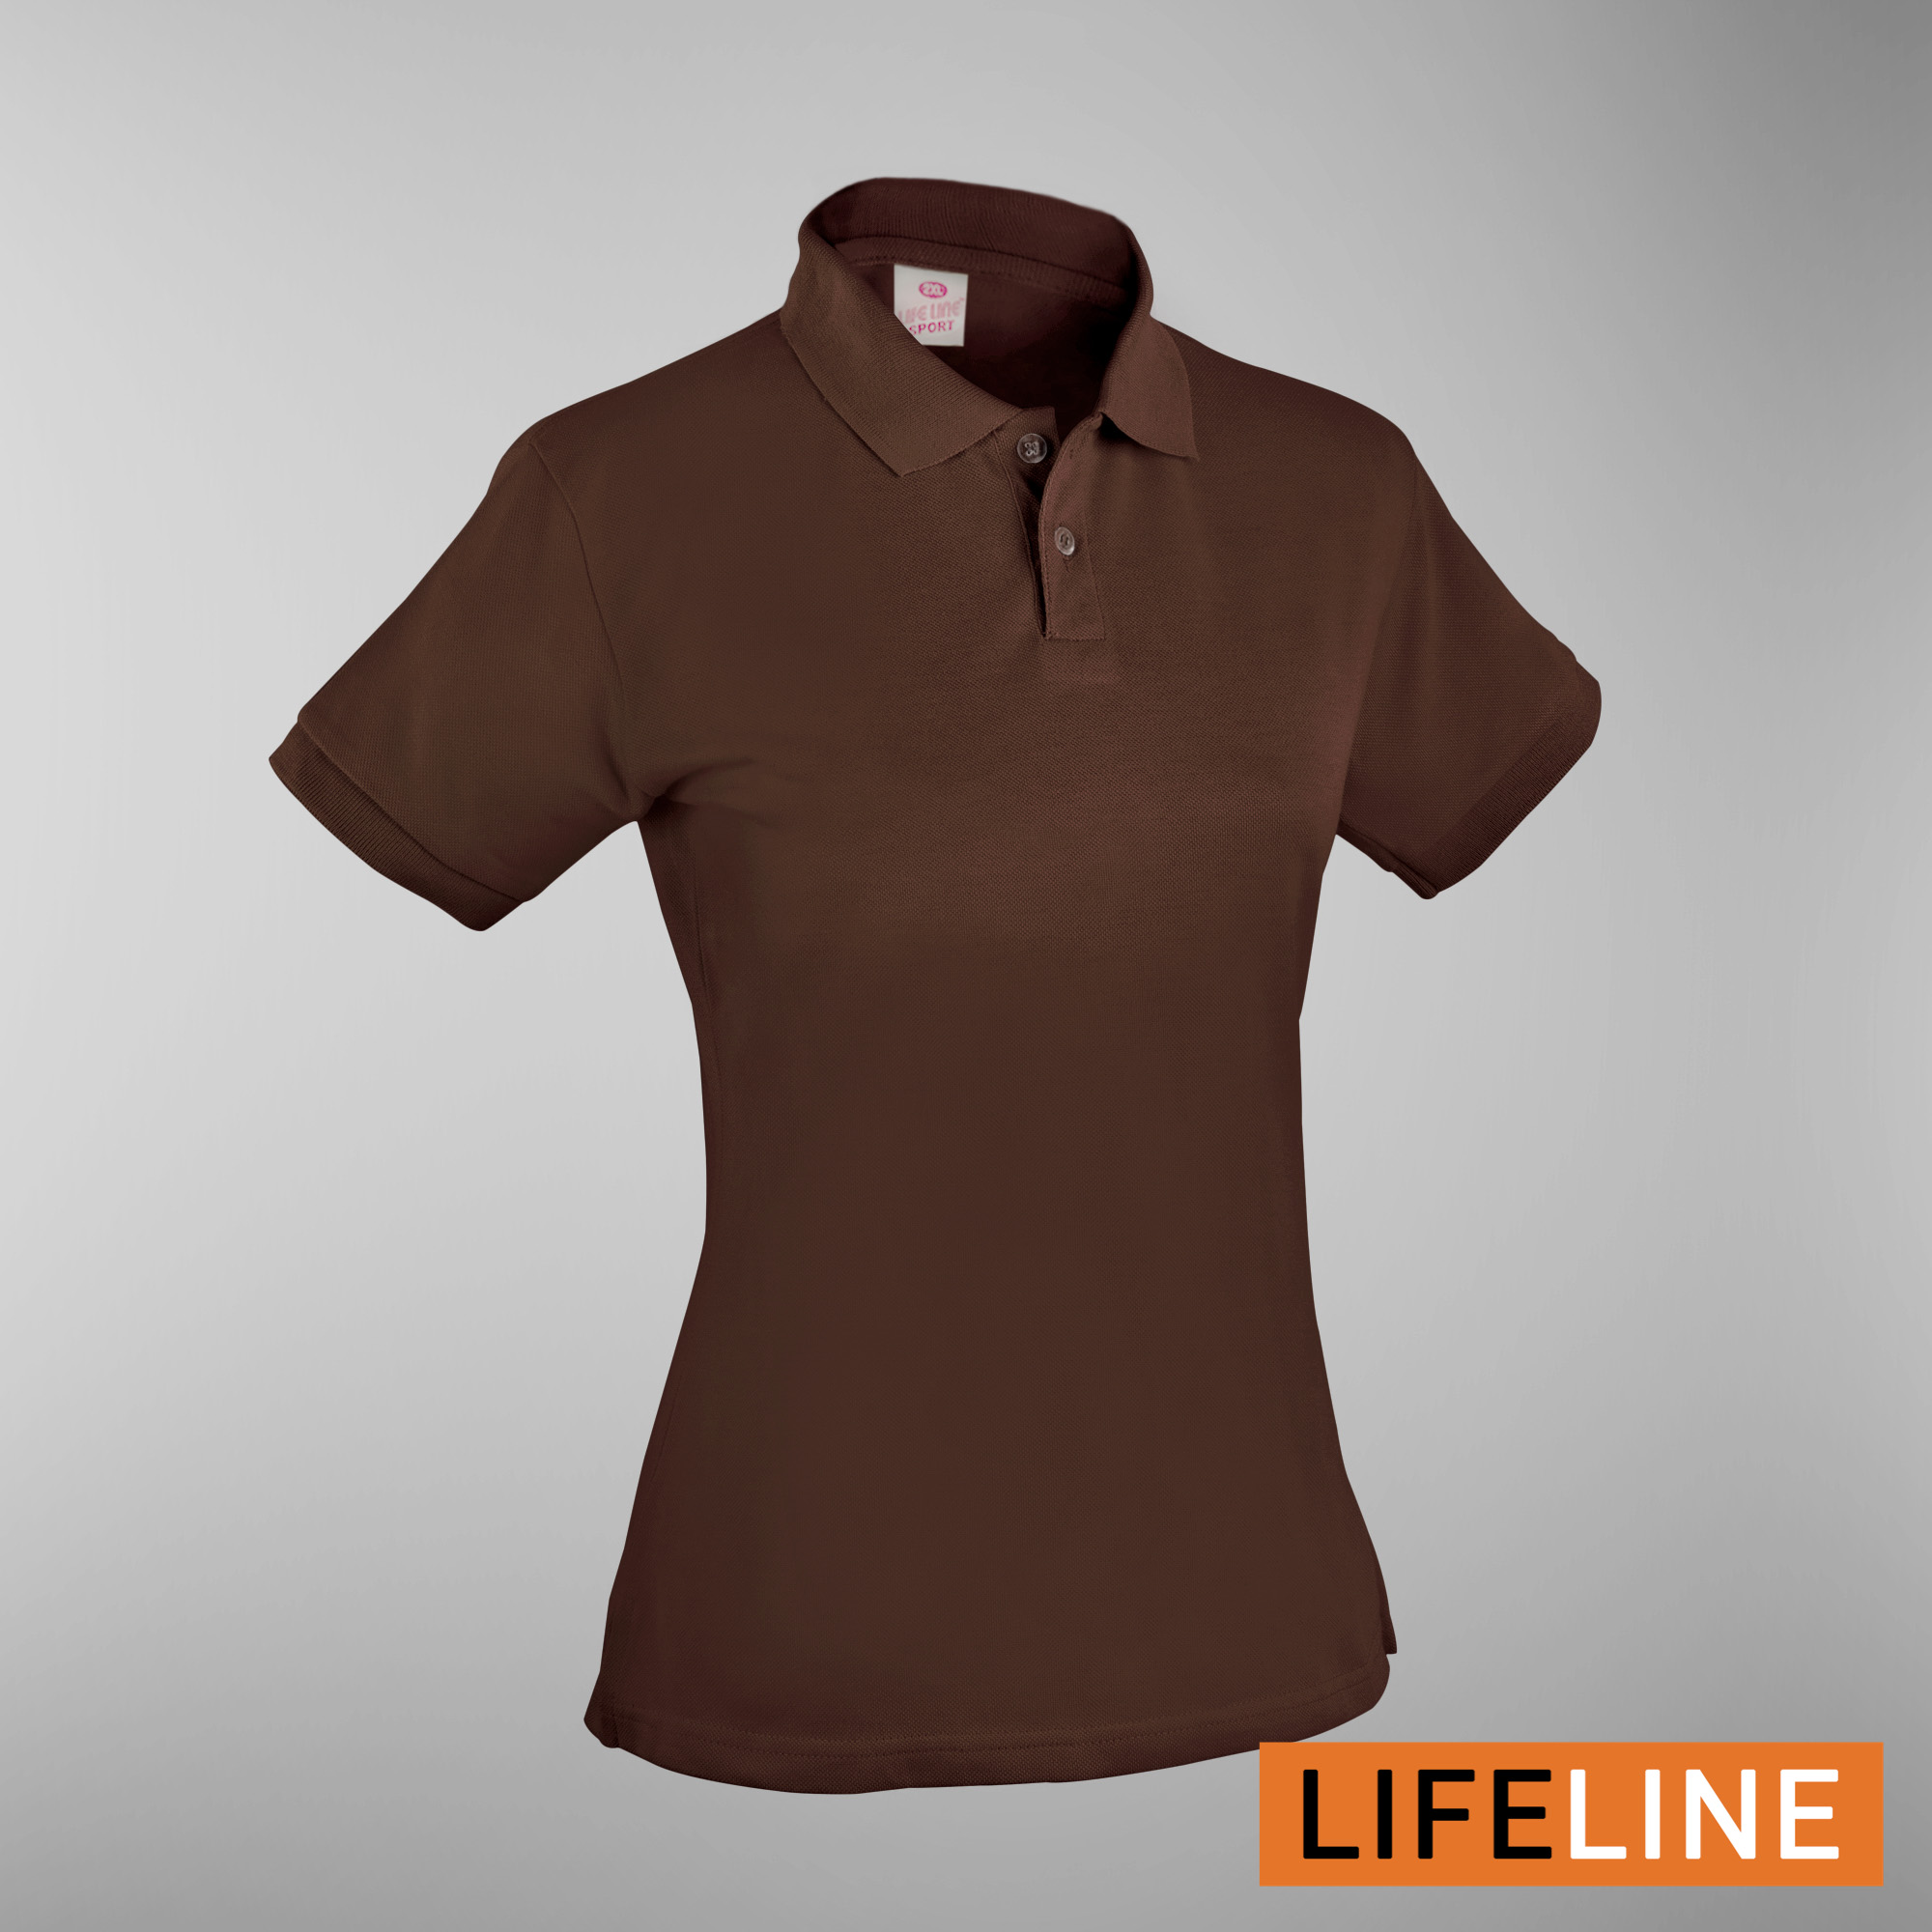 Lifeline Ladies’ Poloshirt (Choco Brown) (Petite Sizes)